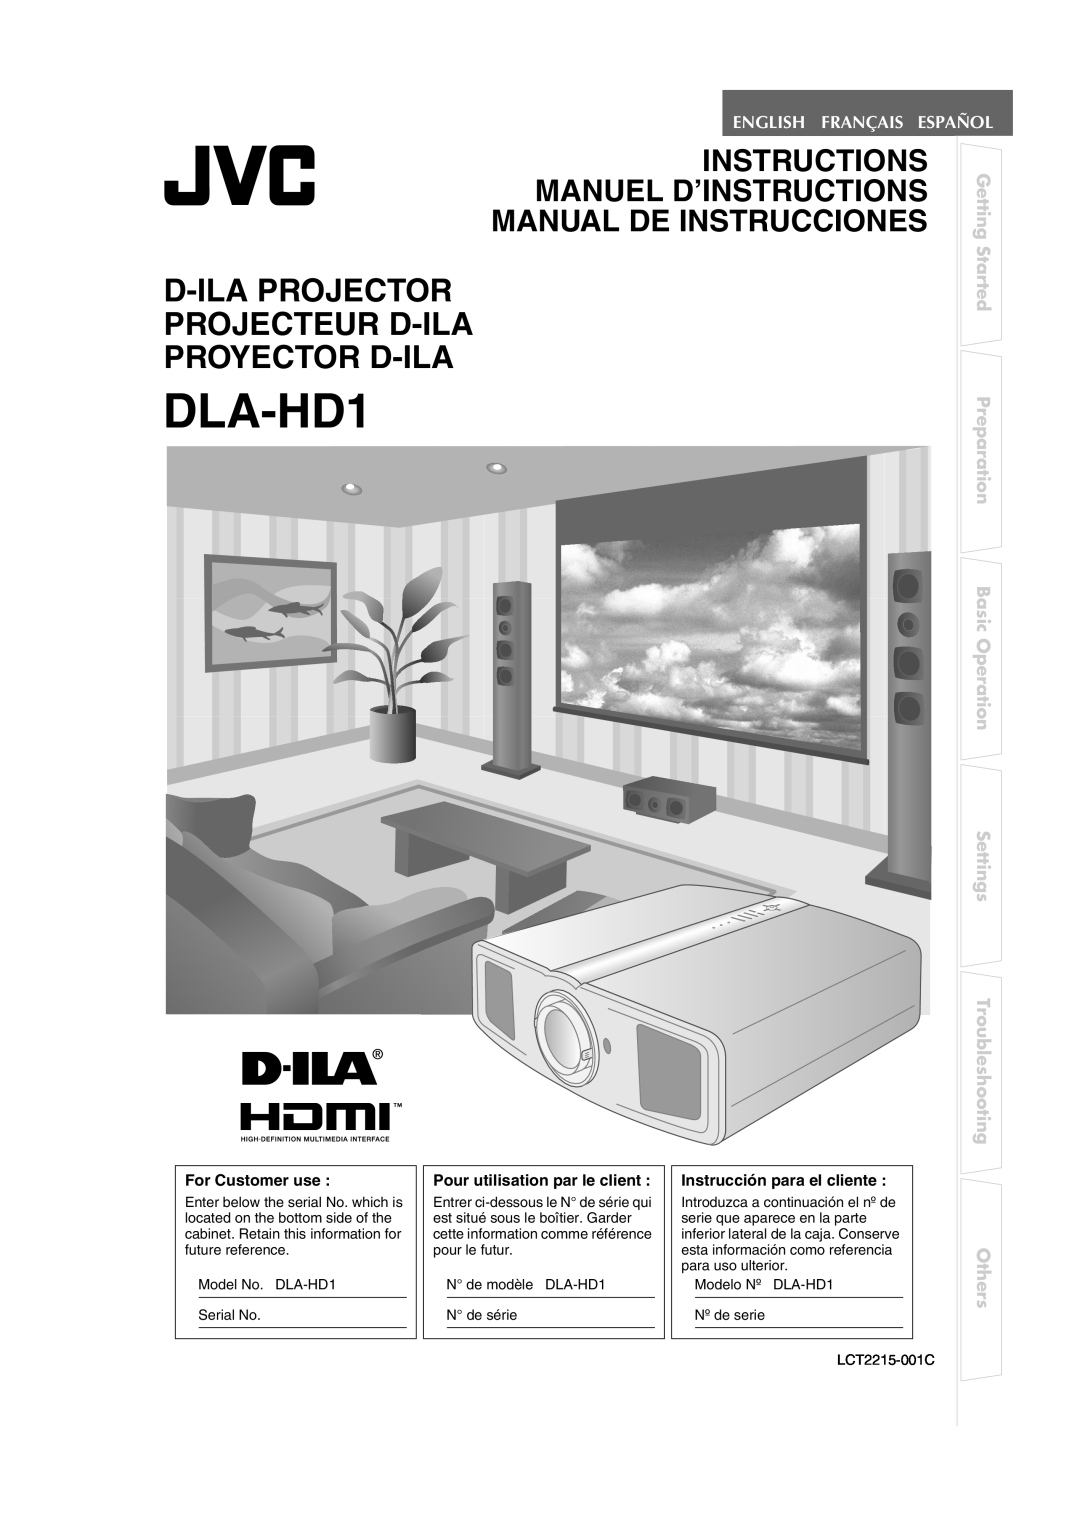 JVC DLA-HD1 manual D-Ila Projector Projecteur D-Ila Proyector D-Ila, English Français Español, Others 